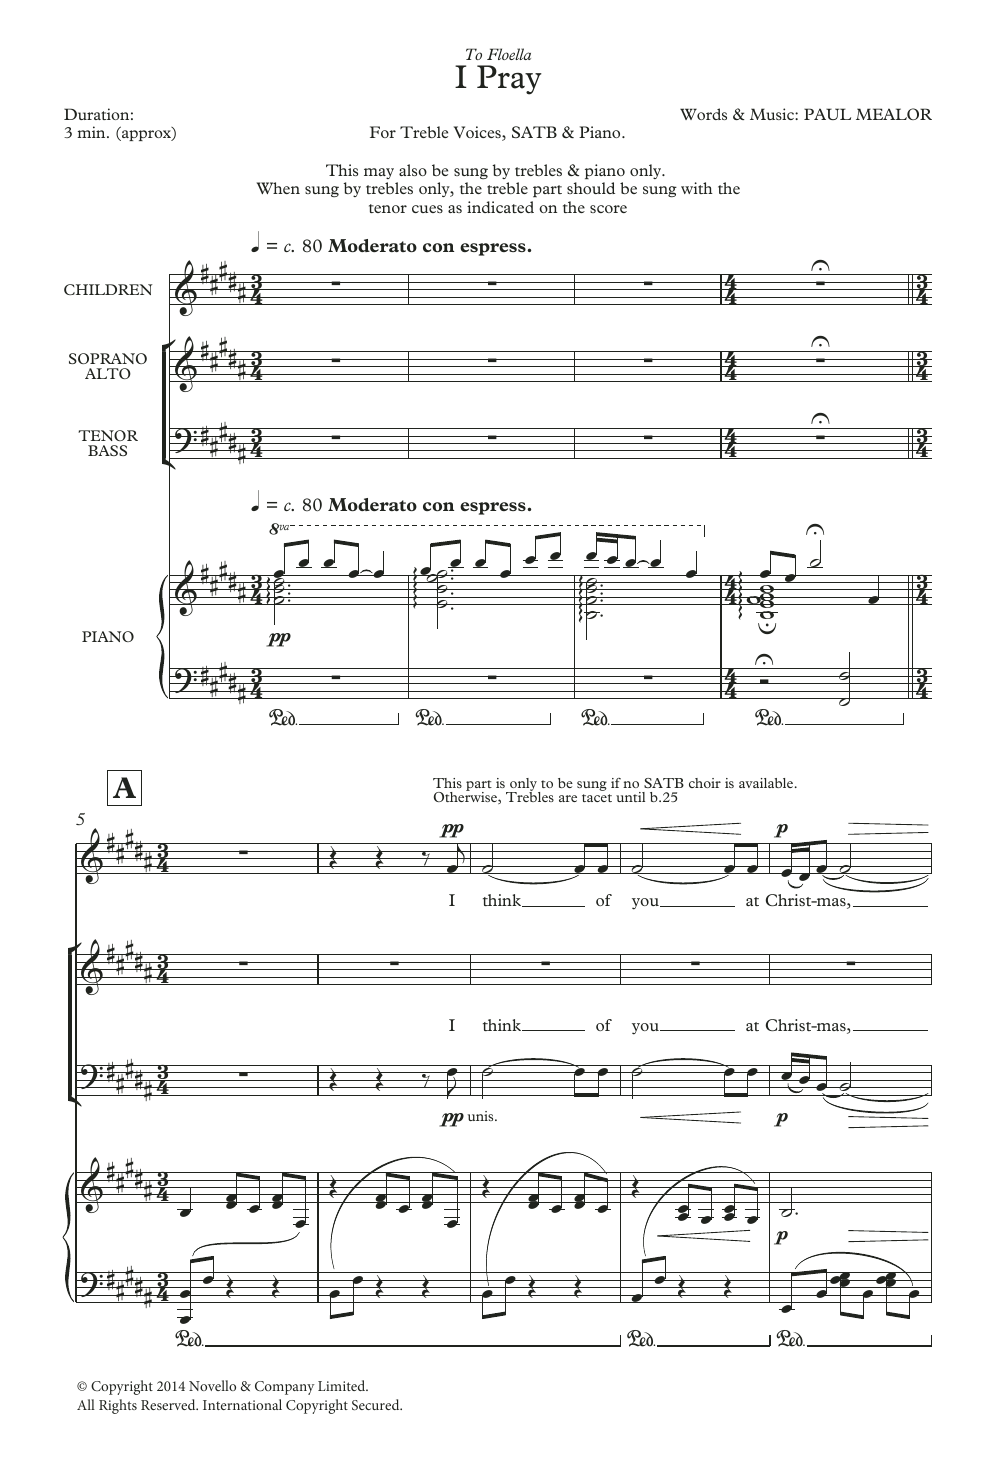 Paul Mealor I Pray Sheet Music Notes & Chords for Choir - Download or Print PDF